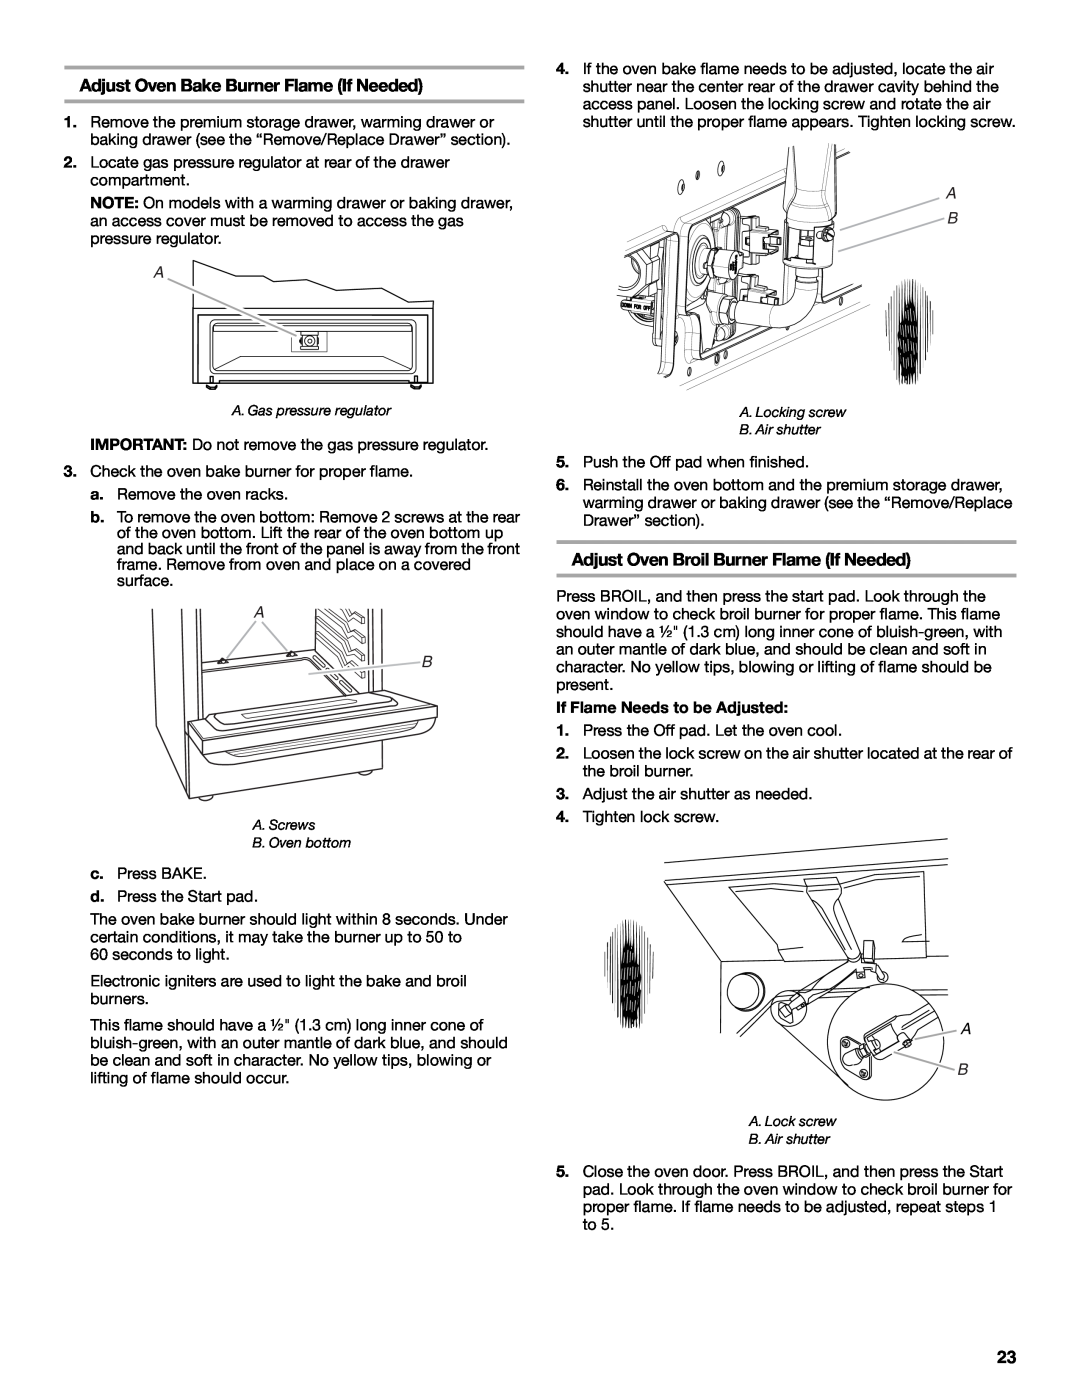 Whirlpool W10665256D Adjust Oven Bake Burner Flame If Needed, Adjust Oven Broil Burner Flame If Needed 